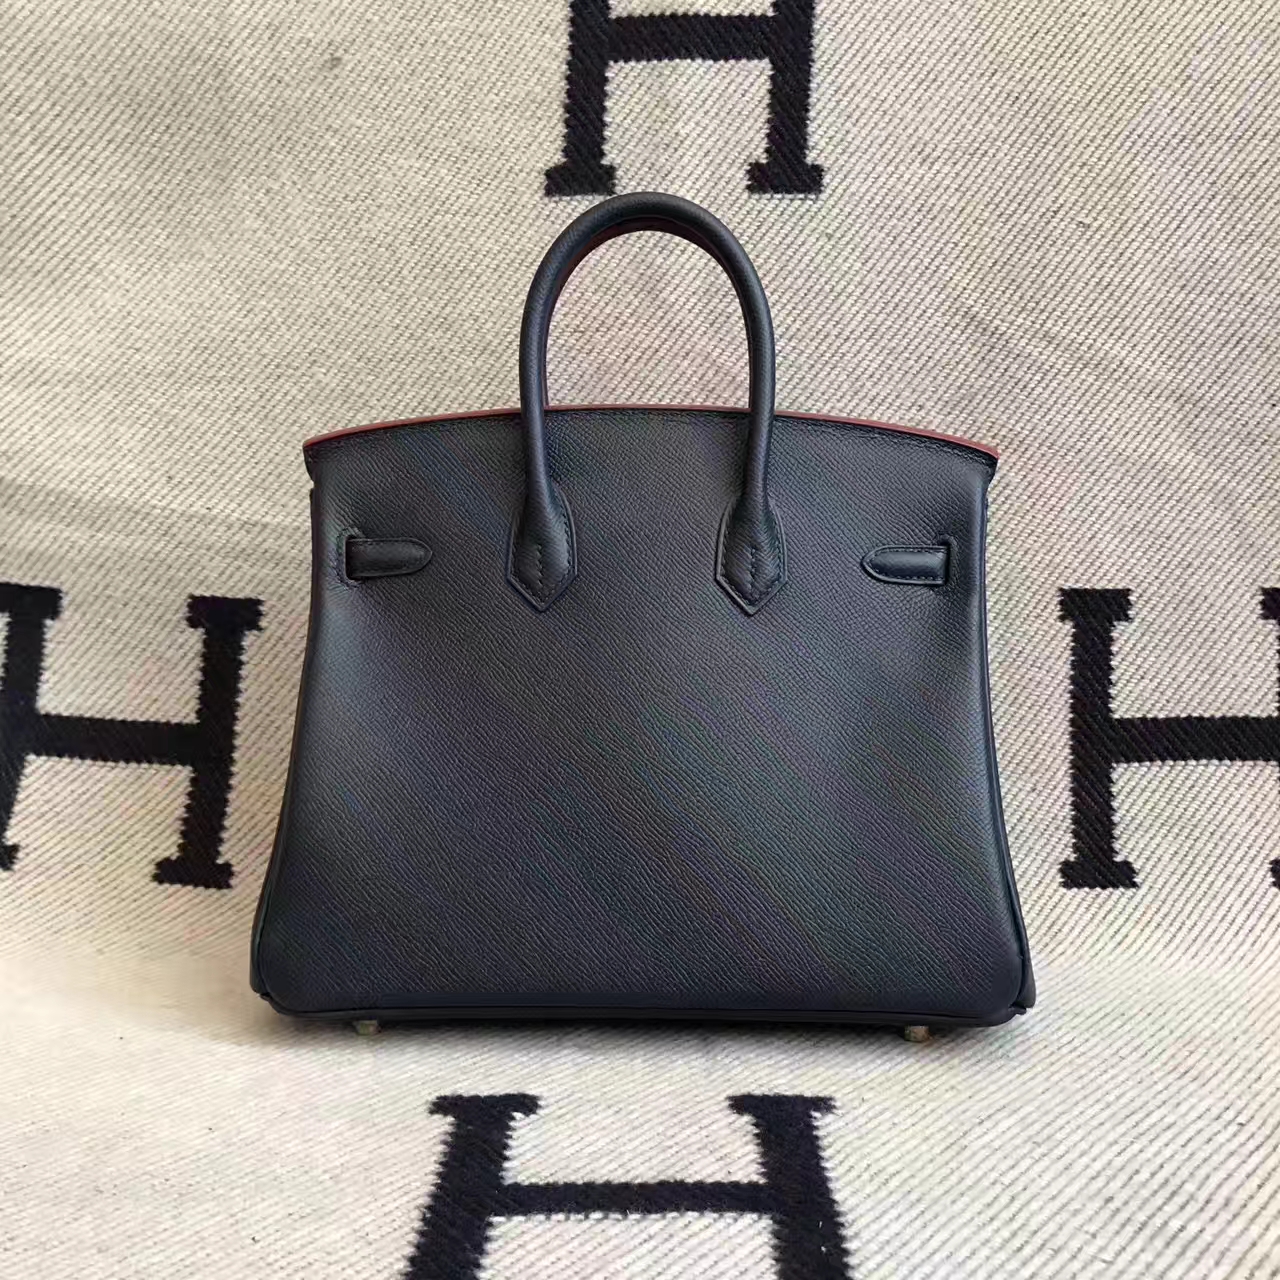 Wholesale Hermes Epsom Leather Birkin Bag 25cm in CK89 Black